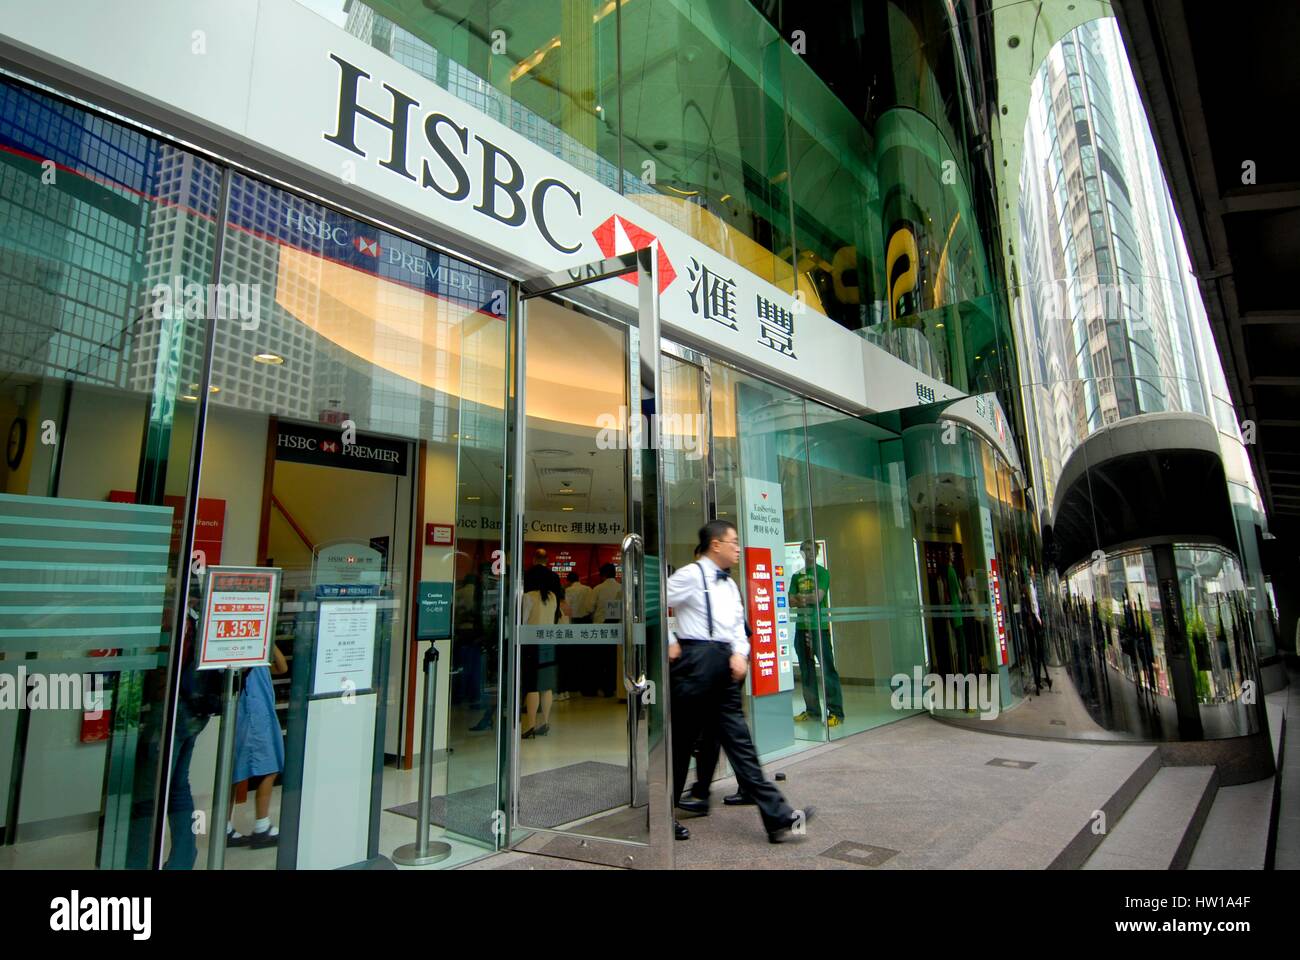 Cina - Hong Kong Islanda - ingresso HSBC, Cina - Hong Kong Island - HSBC Eingang Foto Stock